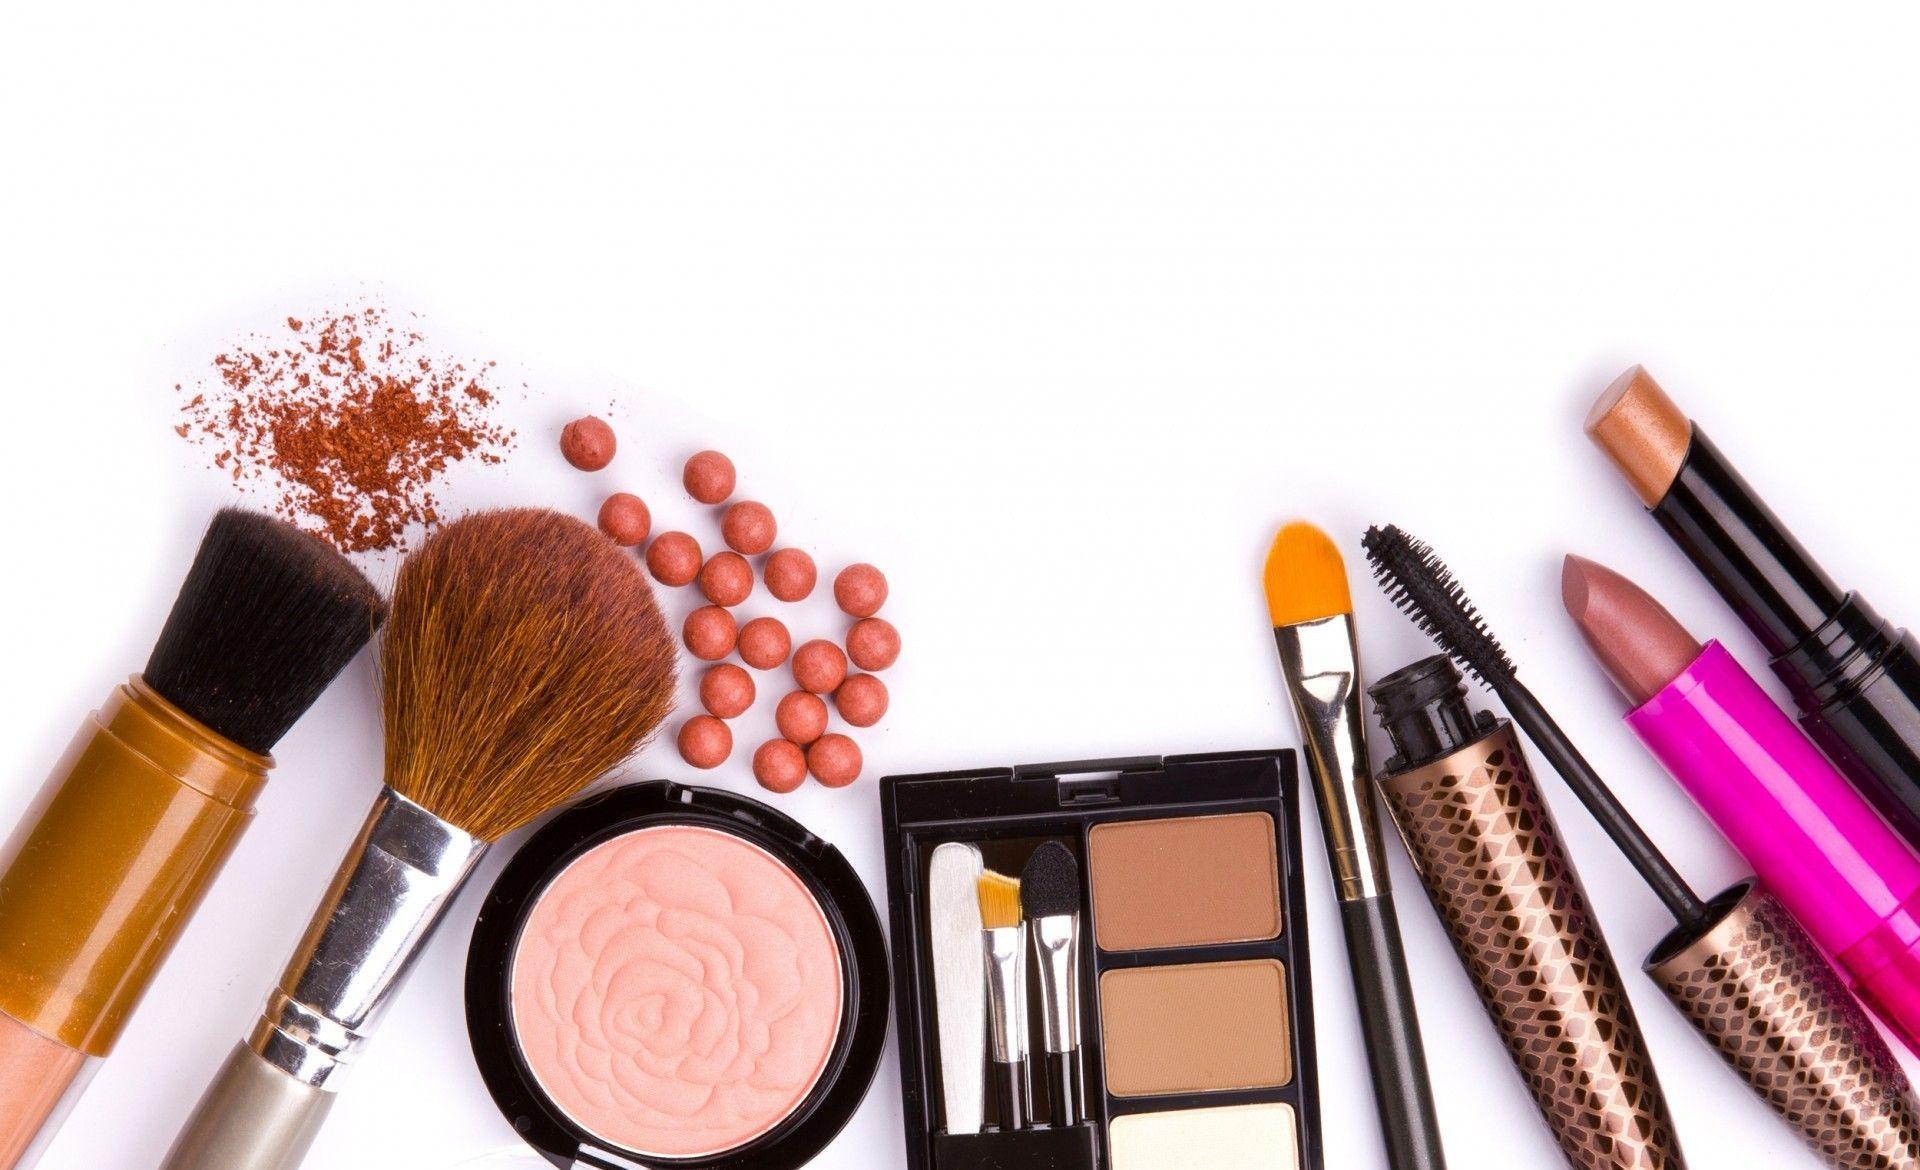 Wallpaper makeup shadows cosmetics blush brush powder makeup  decorative cosmetics images for desktop section разное  download